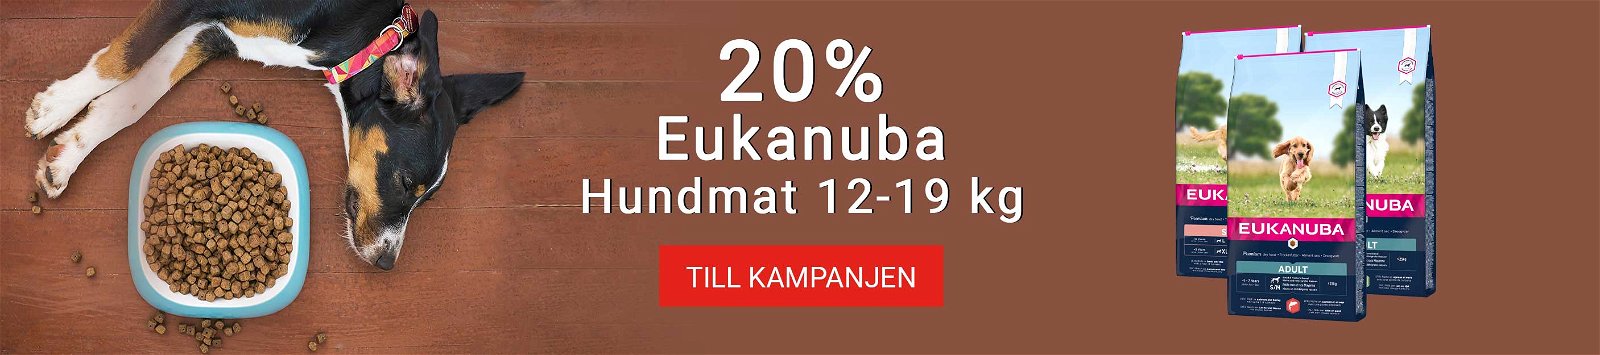 Kampanj på Eukanuba